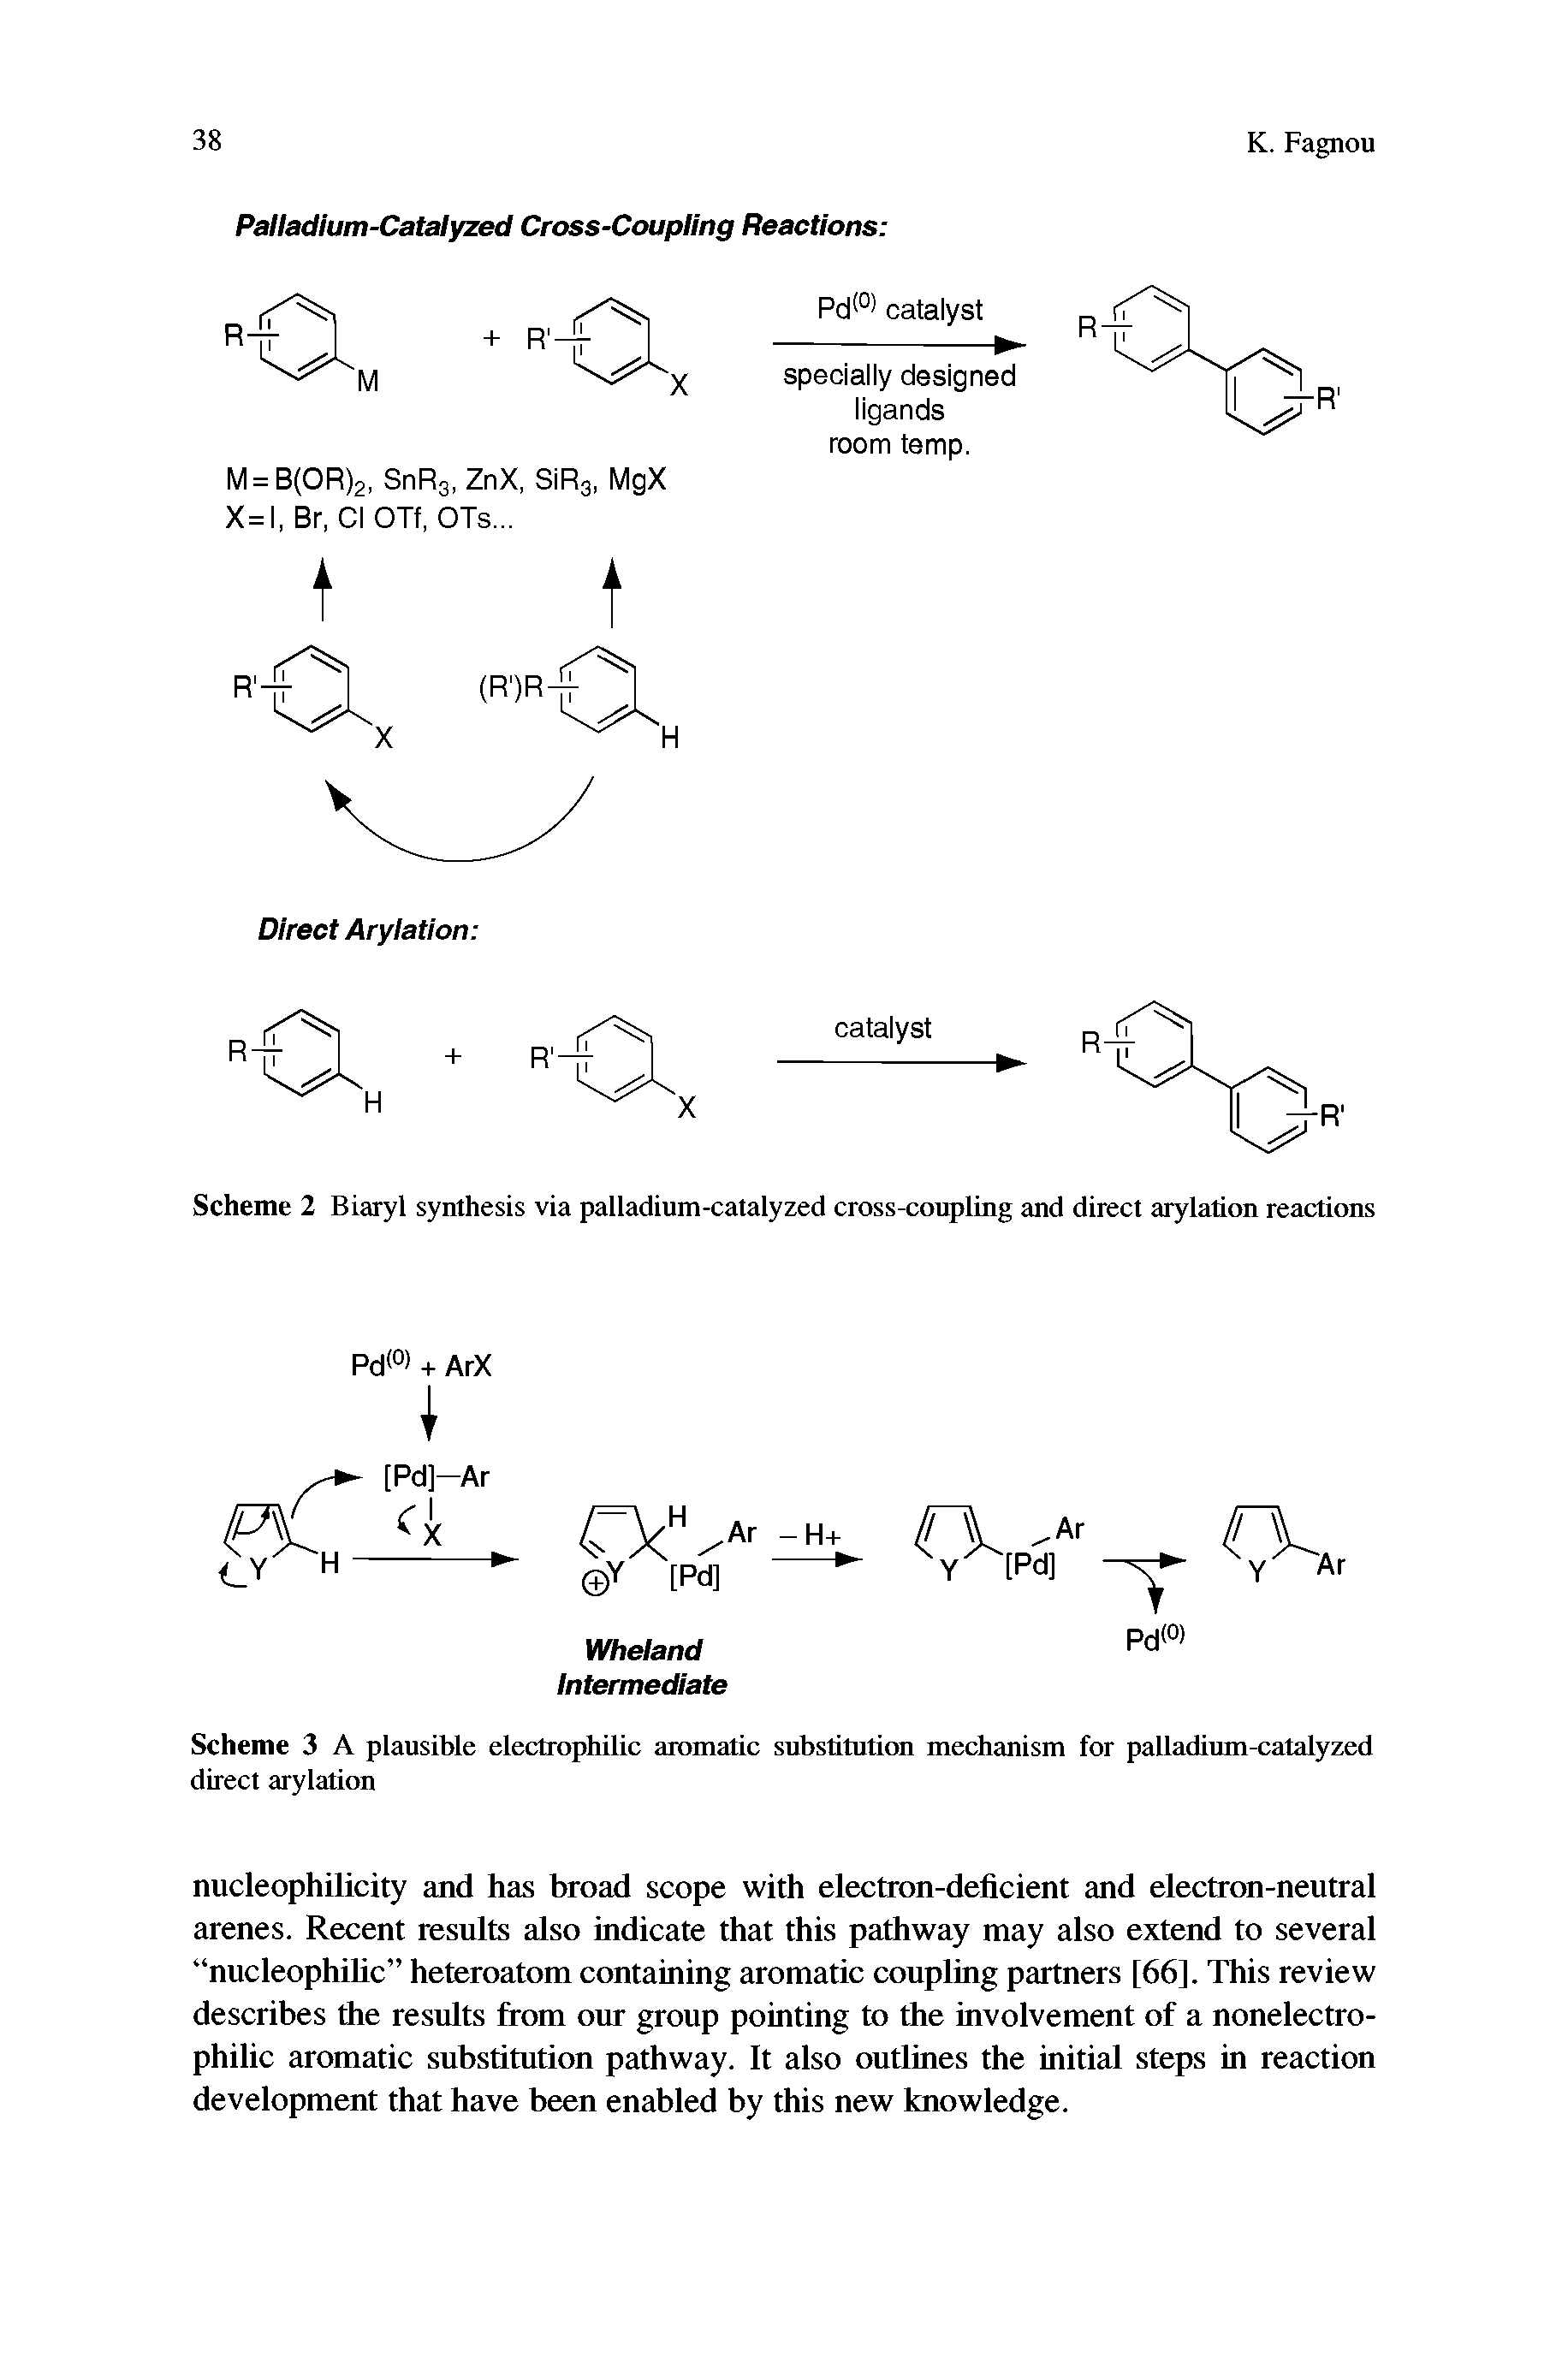 Scheme 2 Biaryl synthesis via palladium-catalyzed cross-coupling and direct arylation reactions...